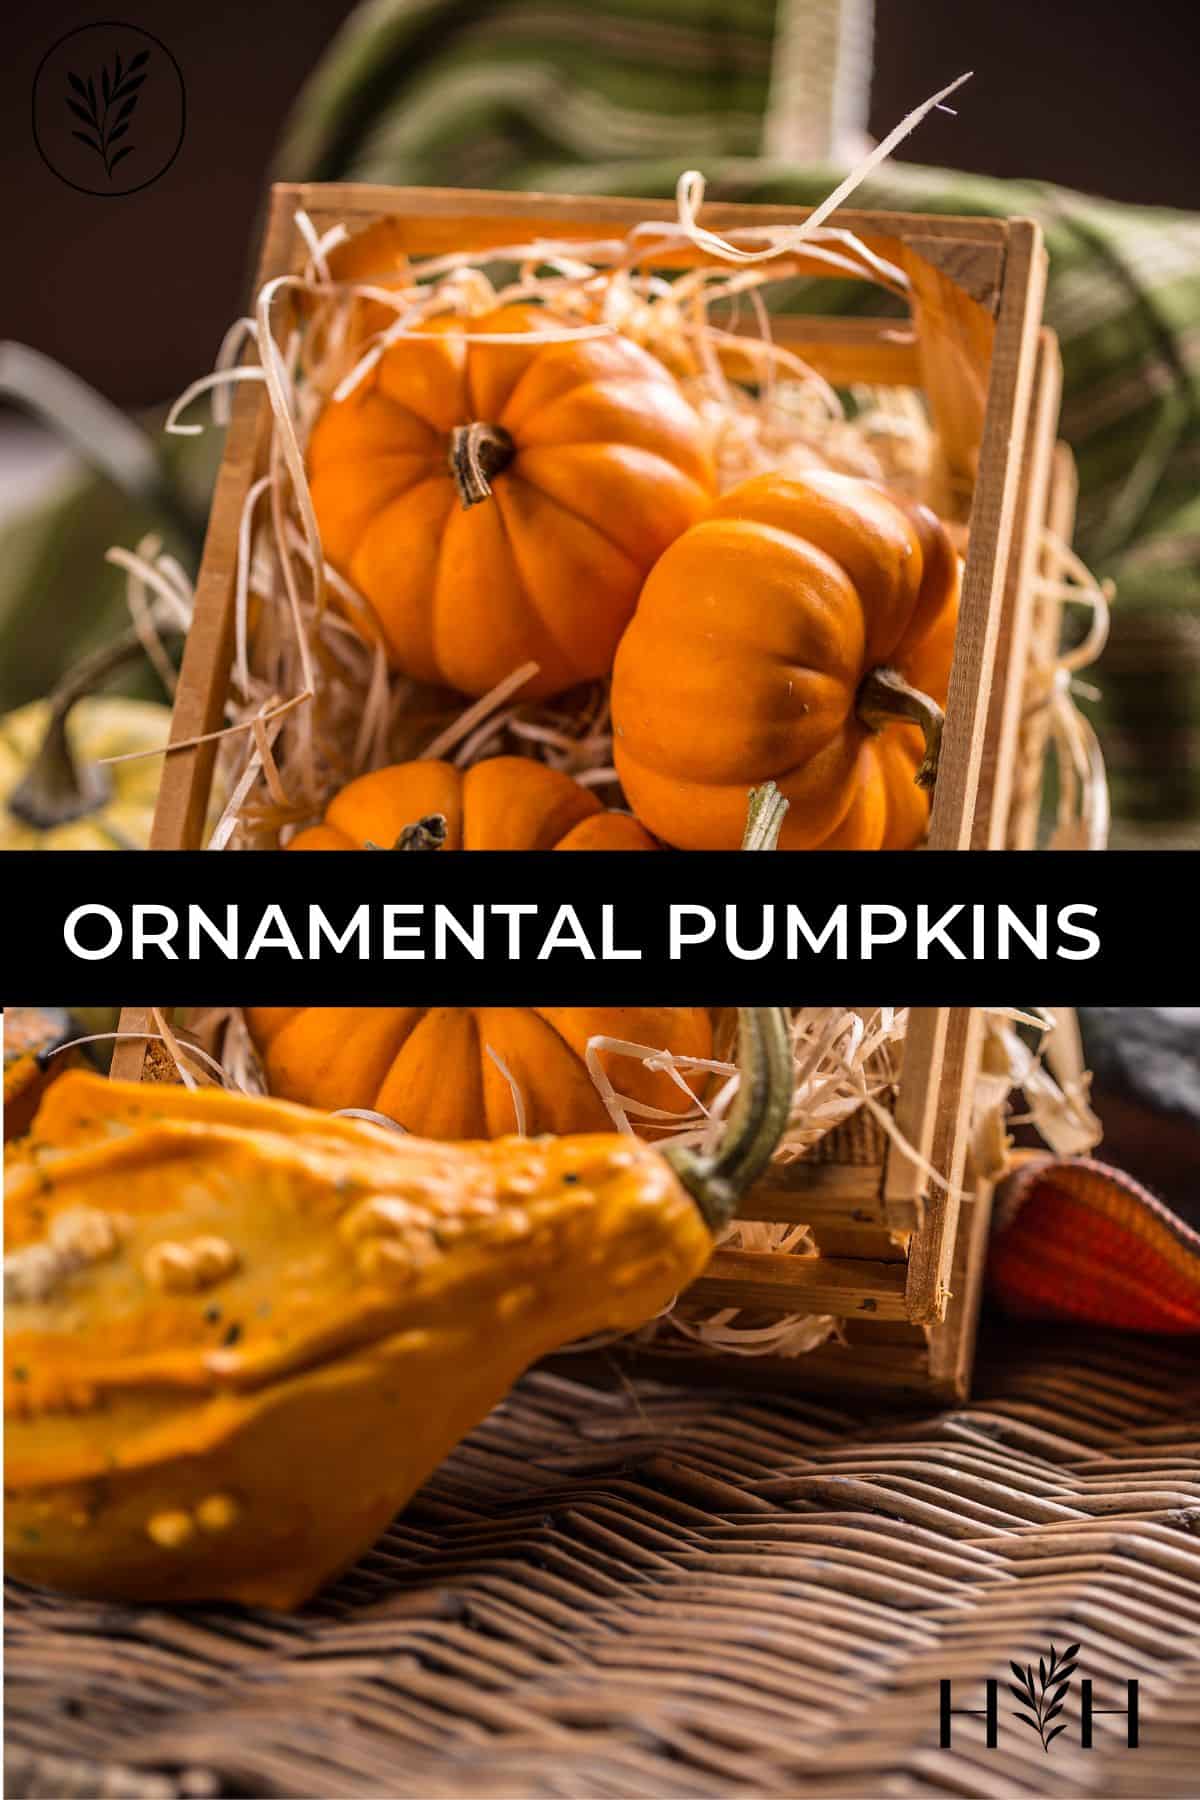 Ornamental pumpkins via @home4theharvest